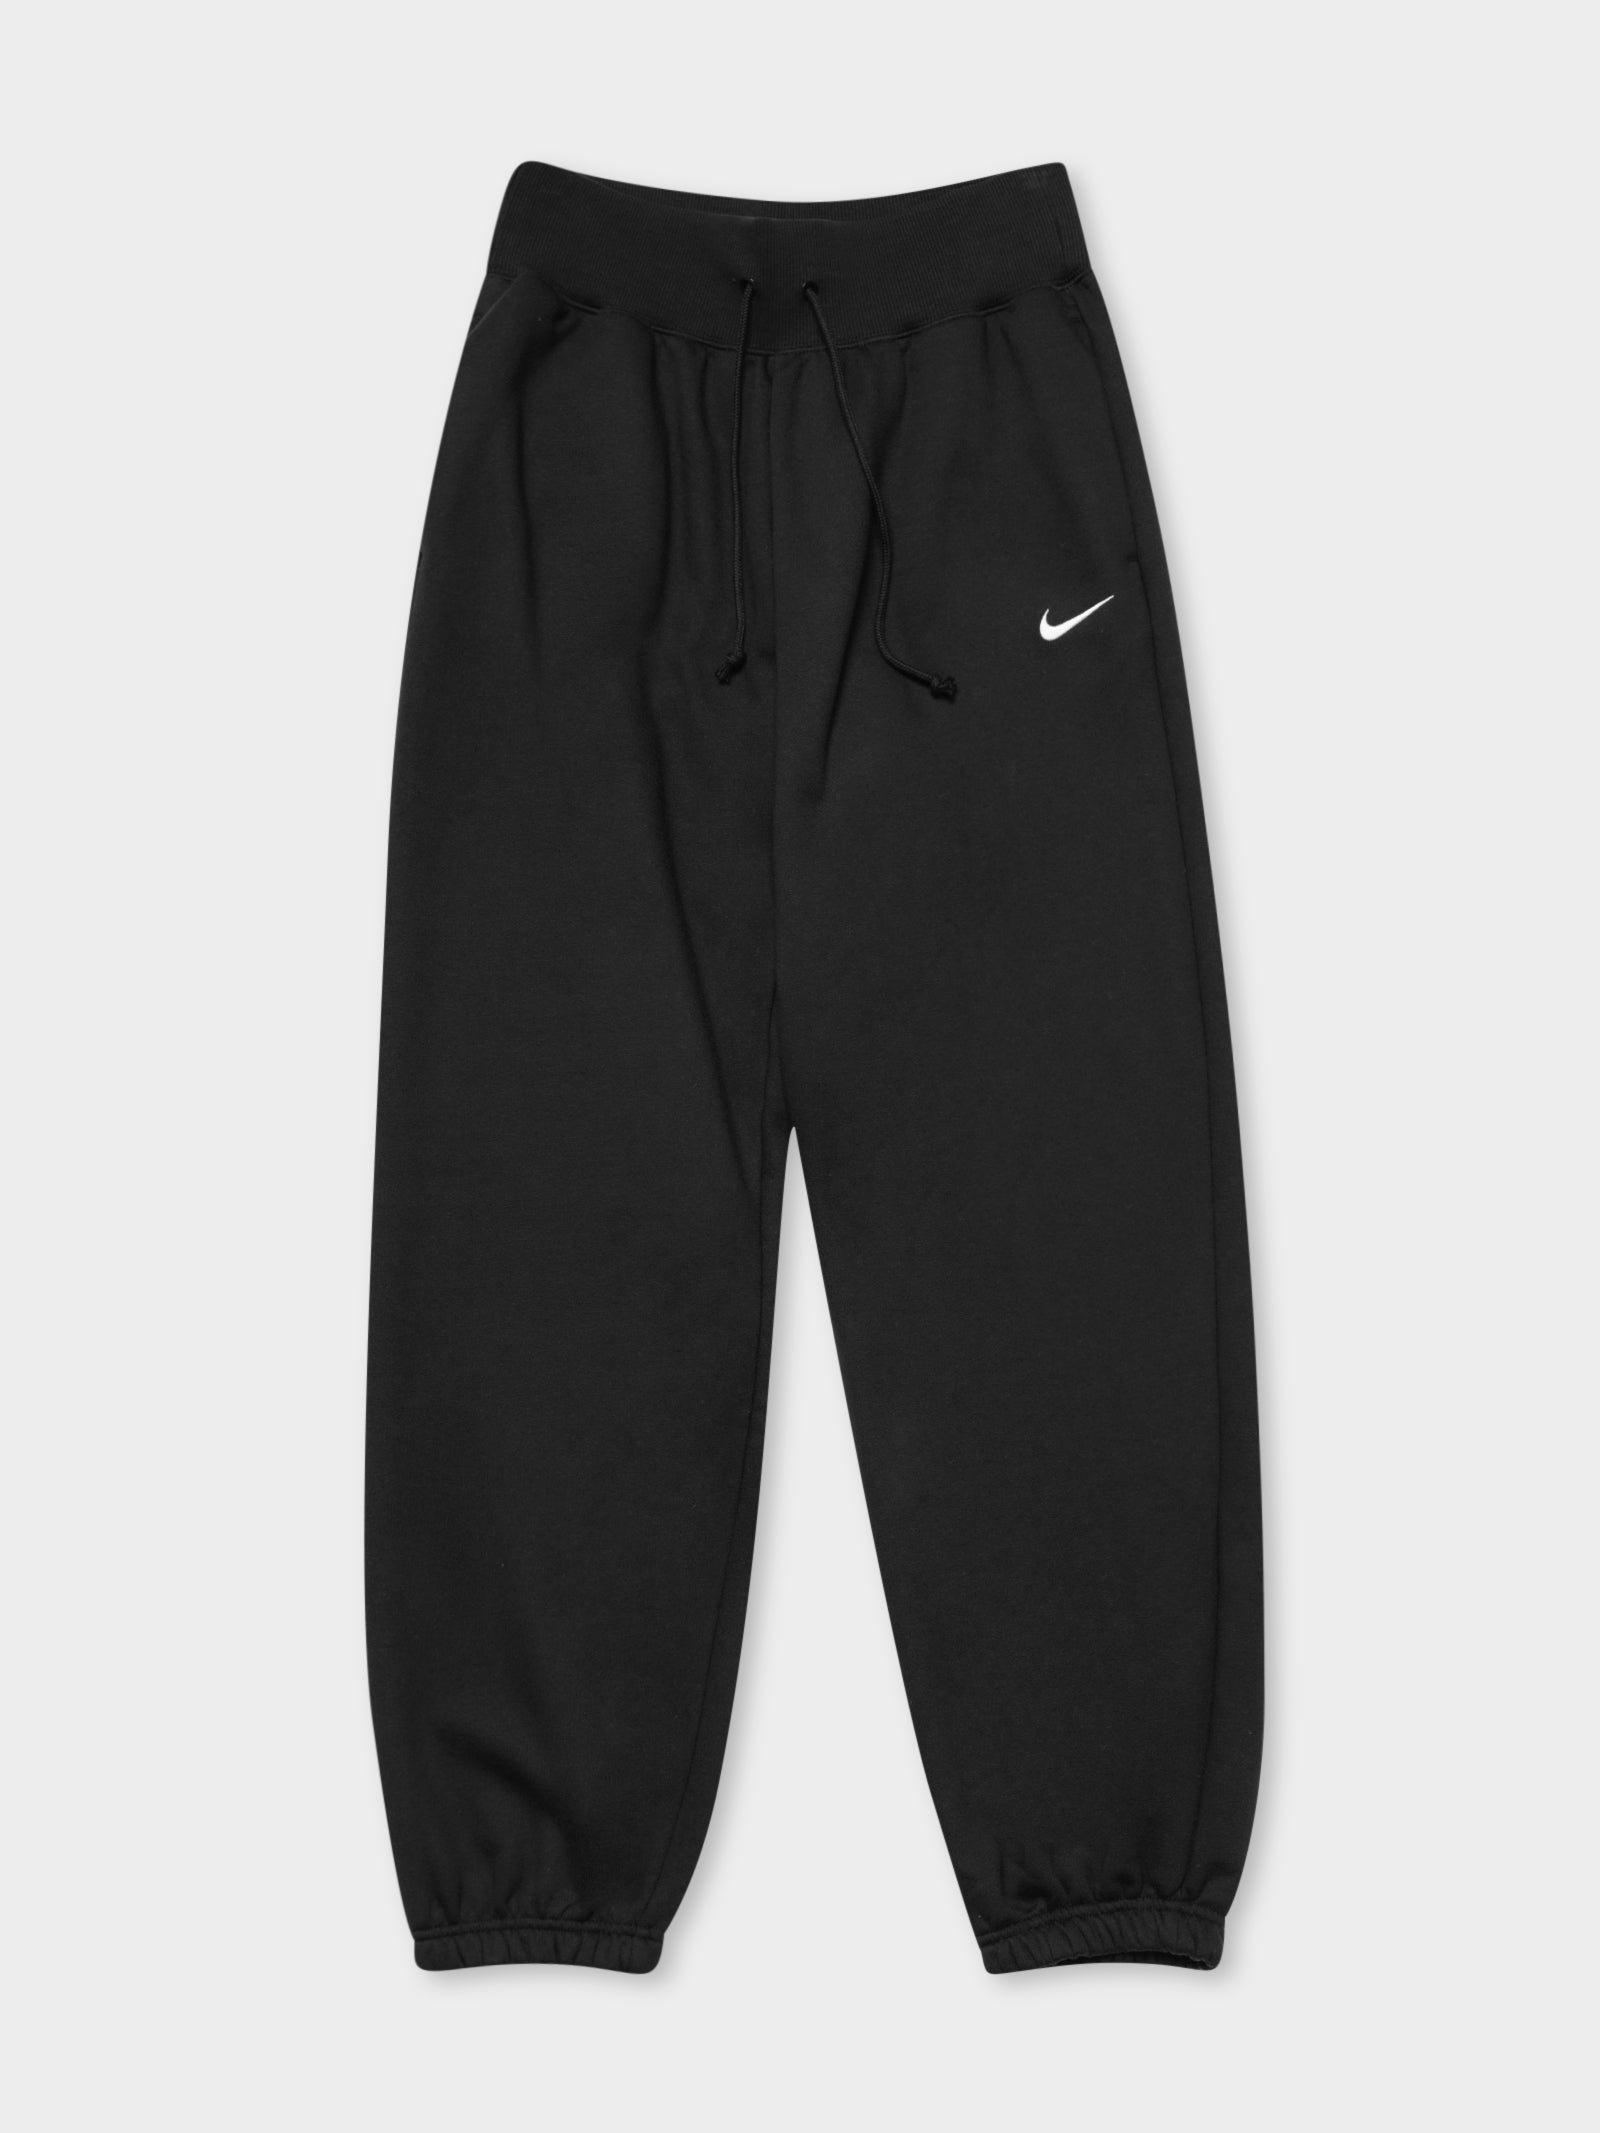 Nike Track Pants - Track Pants